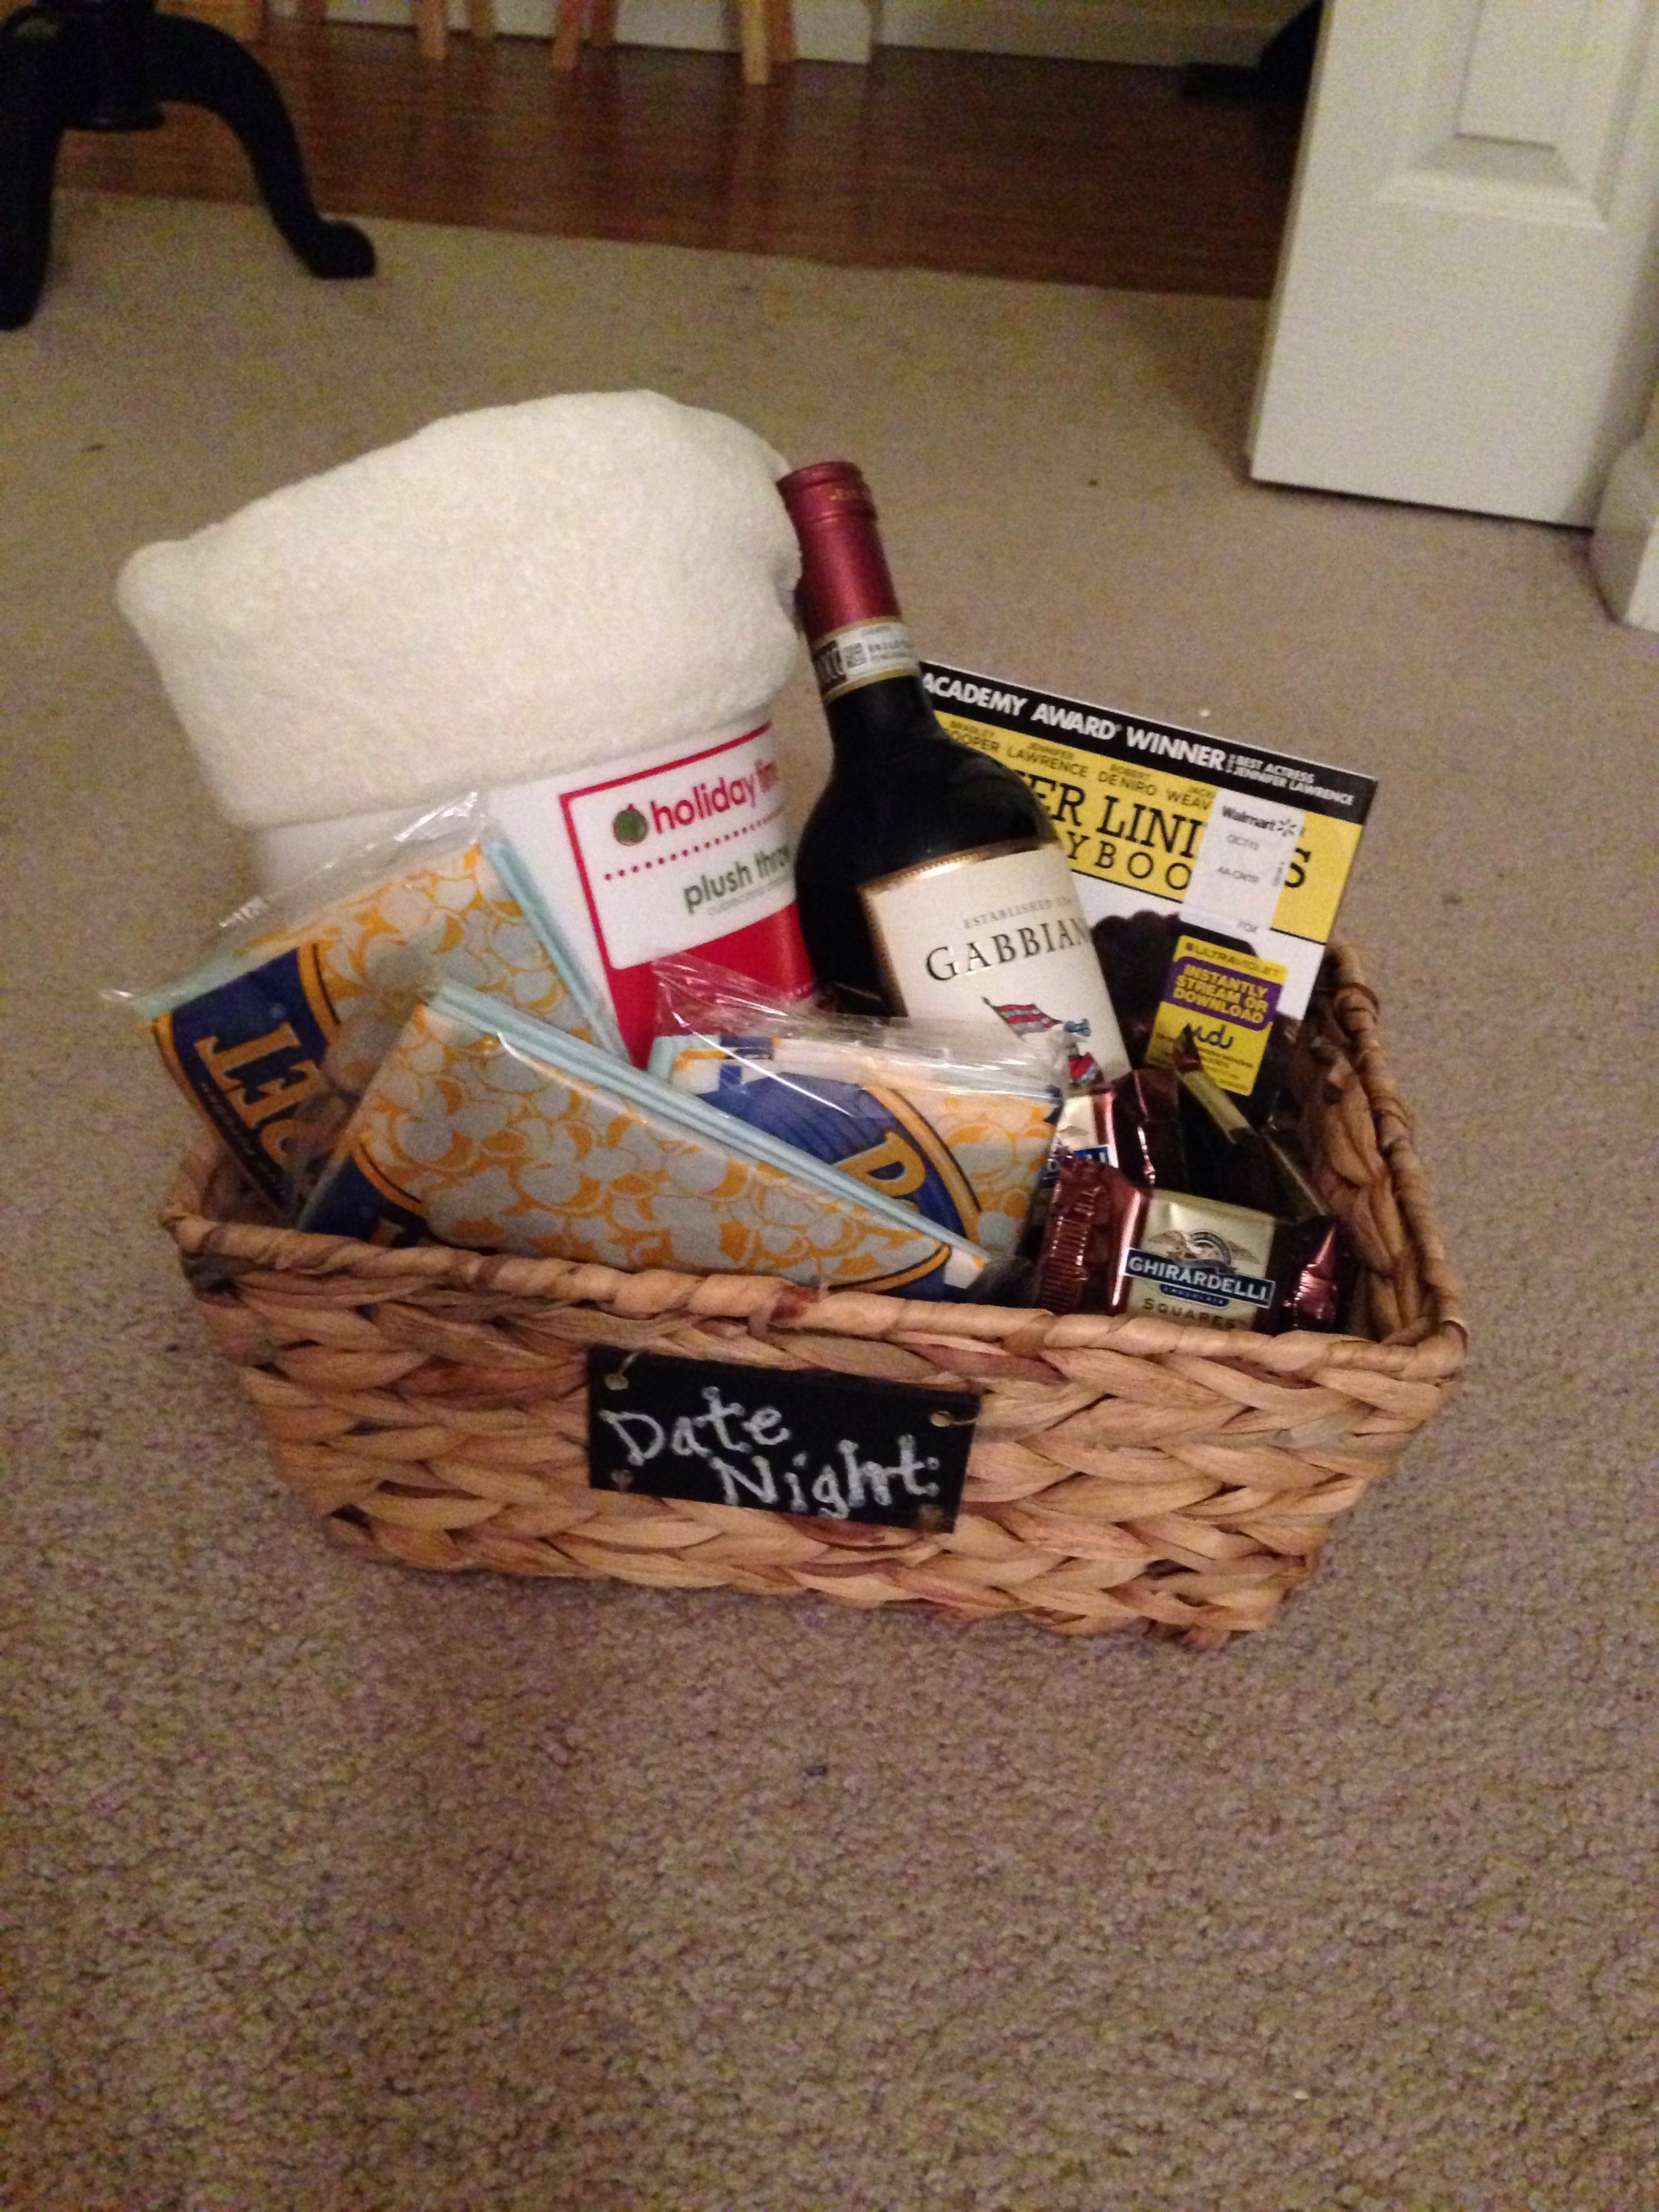 Date Night Gift Basket Ideas
 Holiday Grab Bag Gift Idea "Date Night" Includes a basket